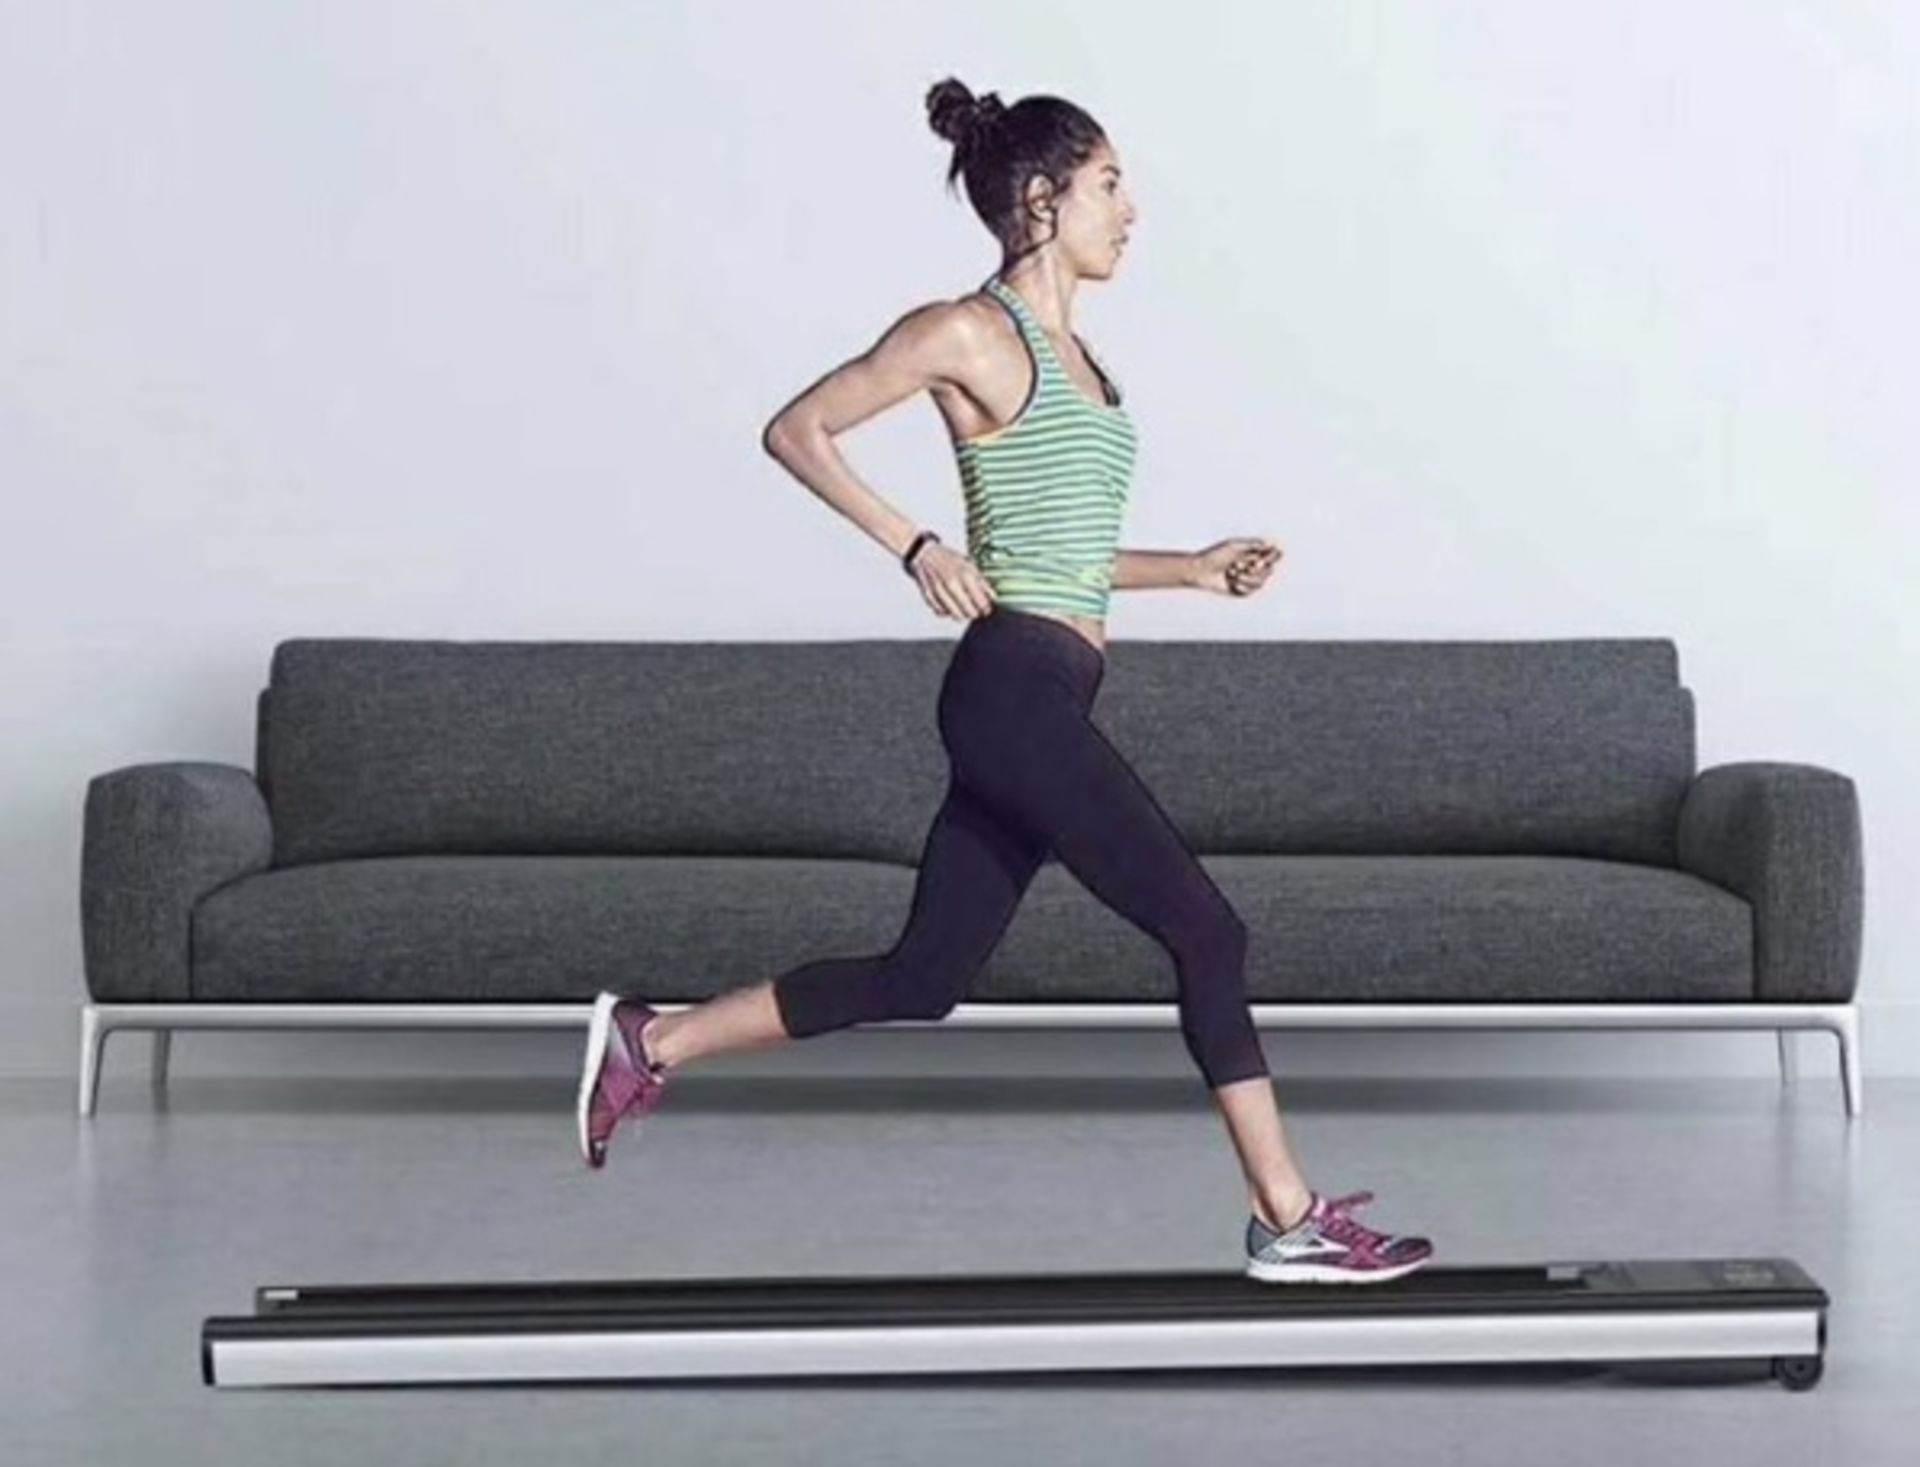 1 x Slim Tread Ultra Thin Smart Treadmill Running / Walking Machine - Lightweight With Folding - Image 11 of 19